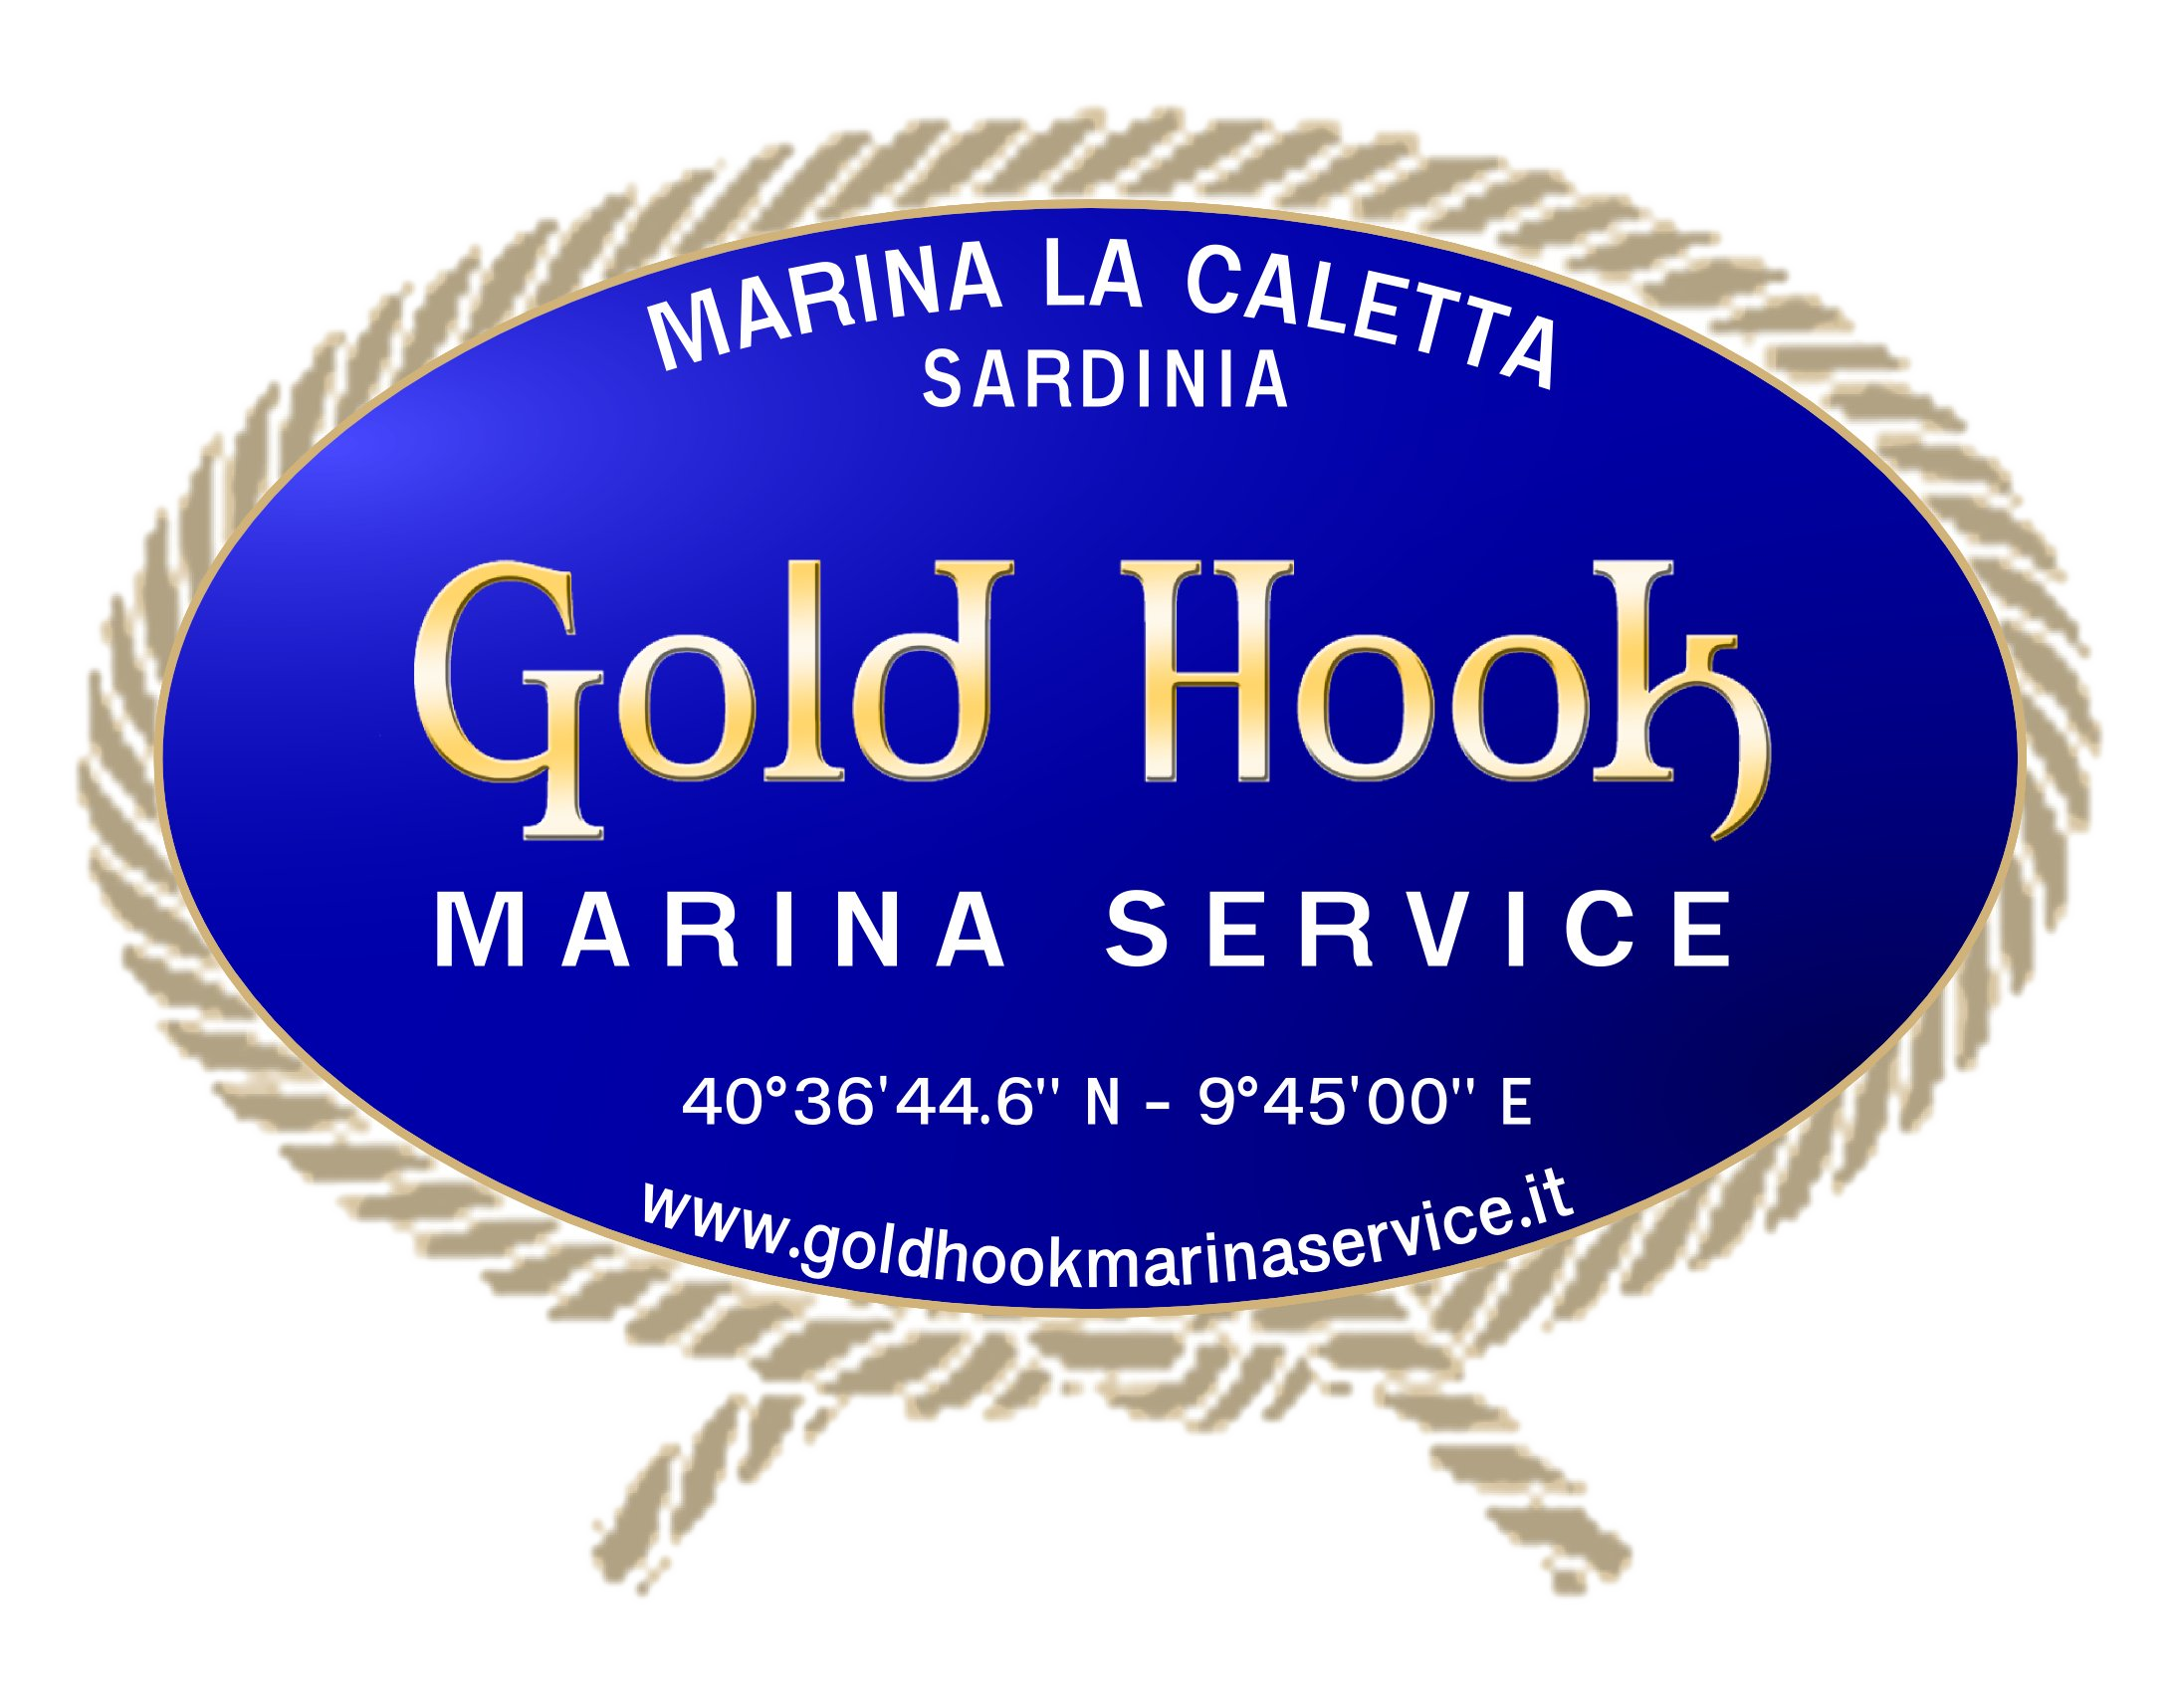 Gold Hook Marina Service